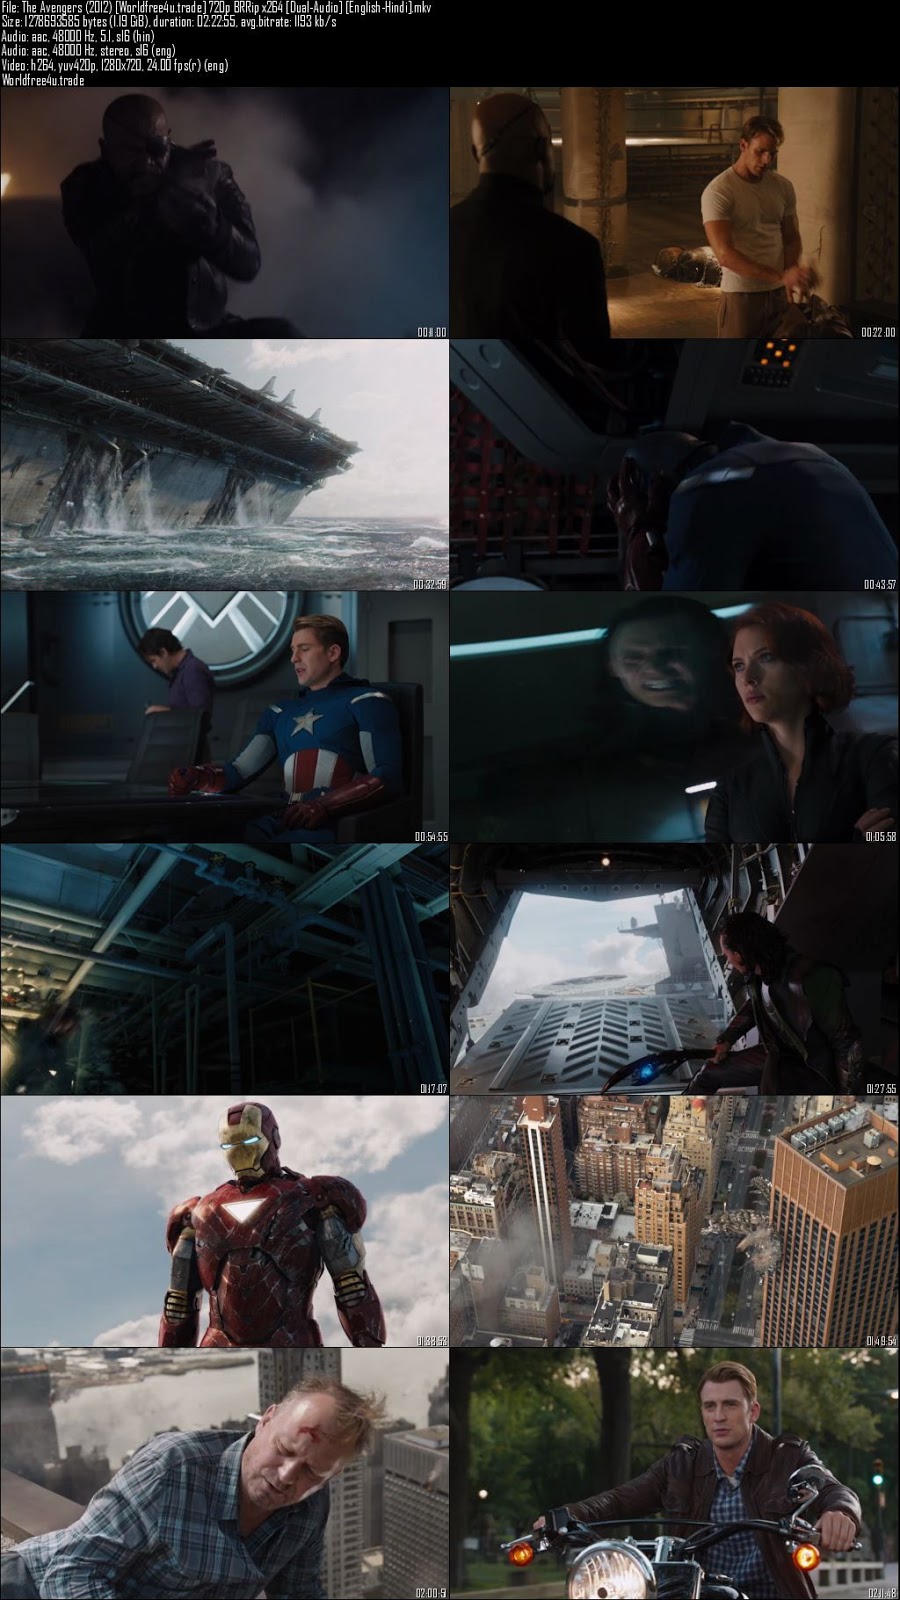 ScreenShot of The Avengers (2012) BRRip 720p Dual Audio In Hindi English